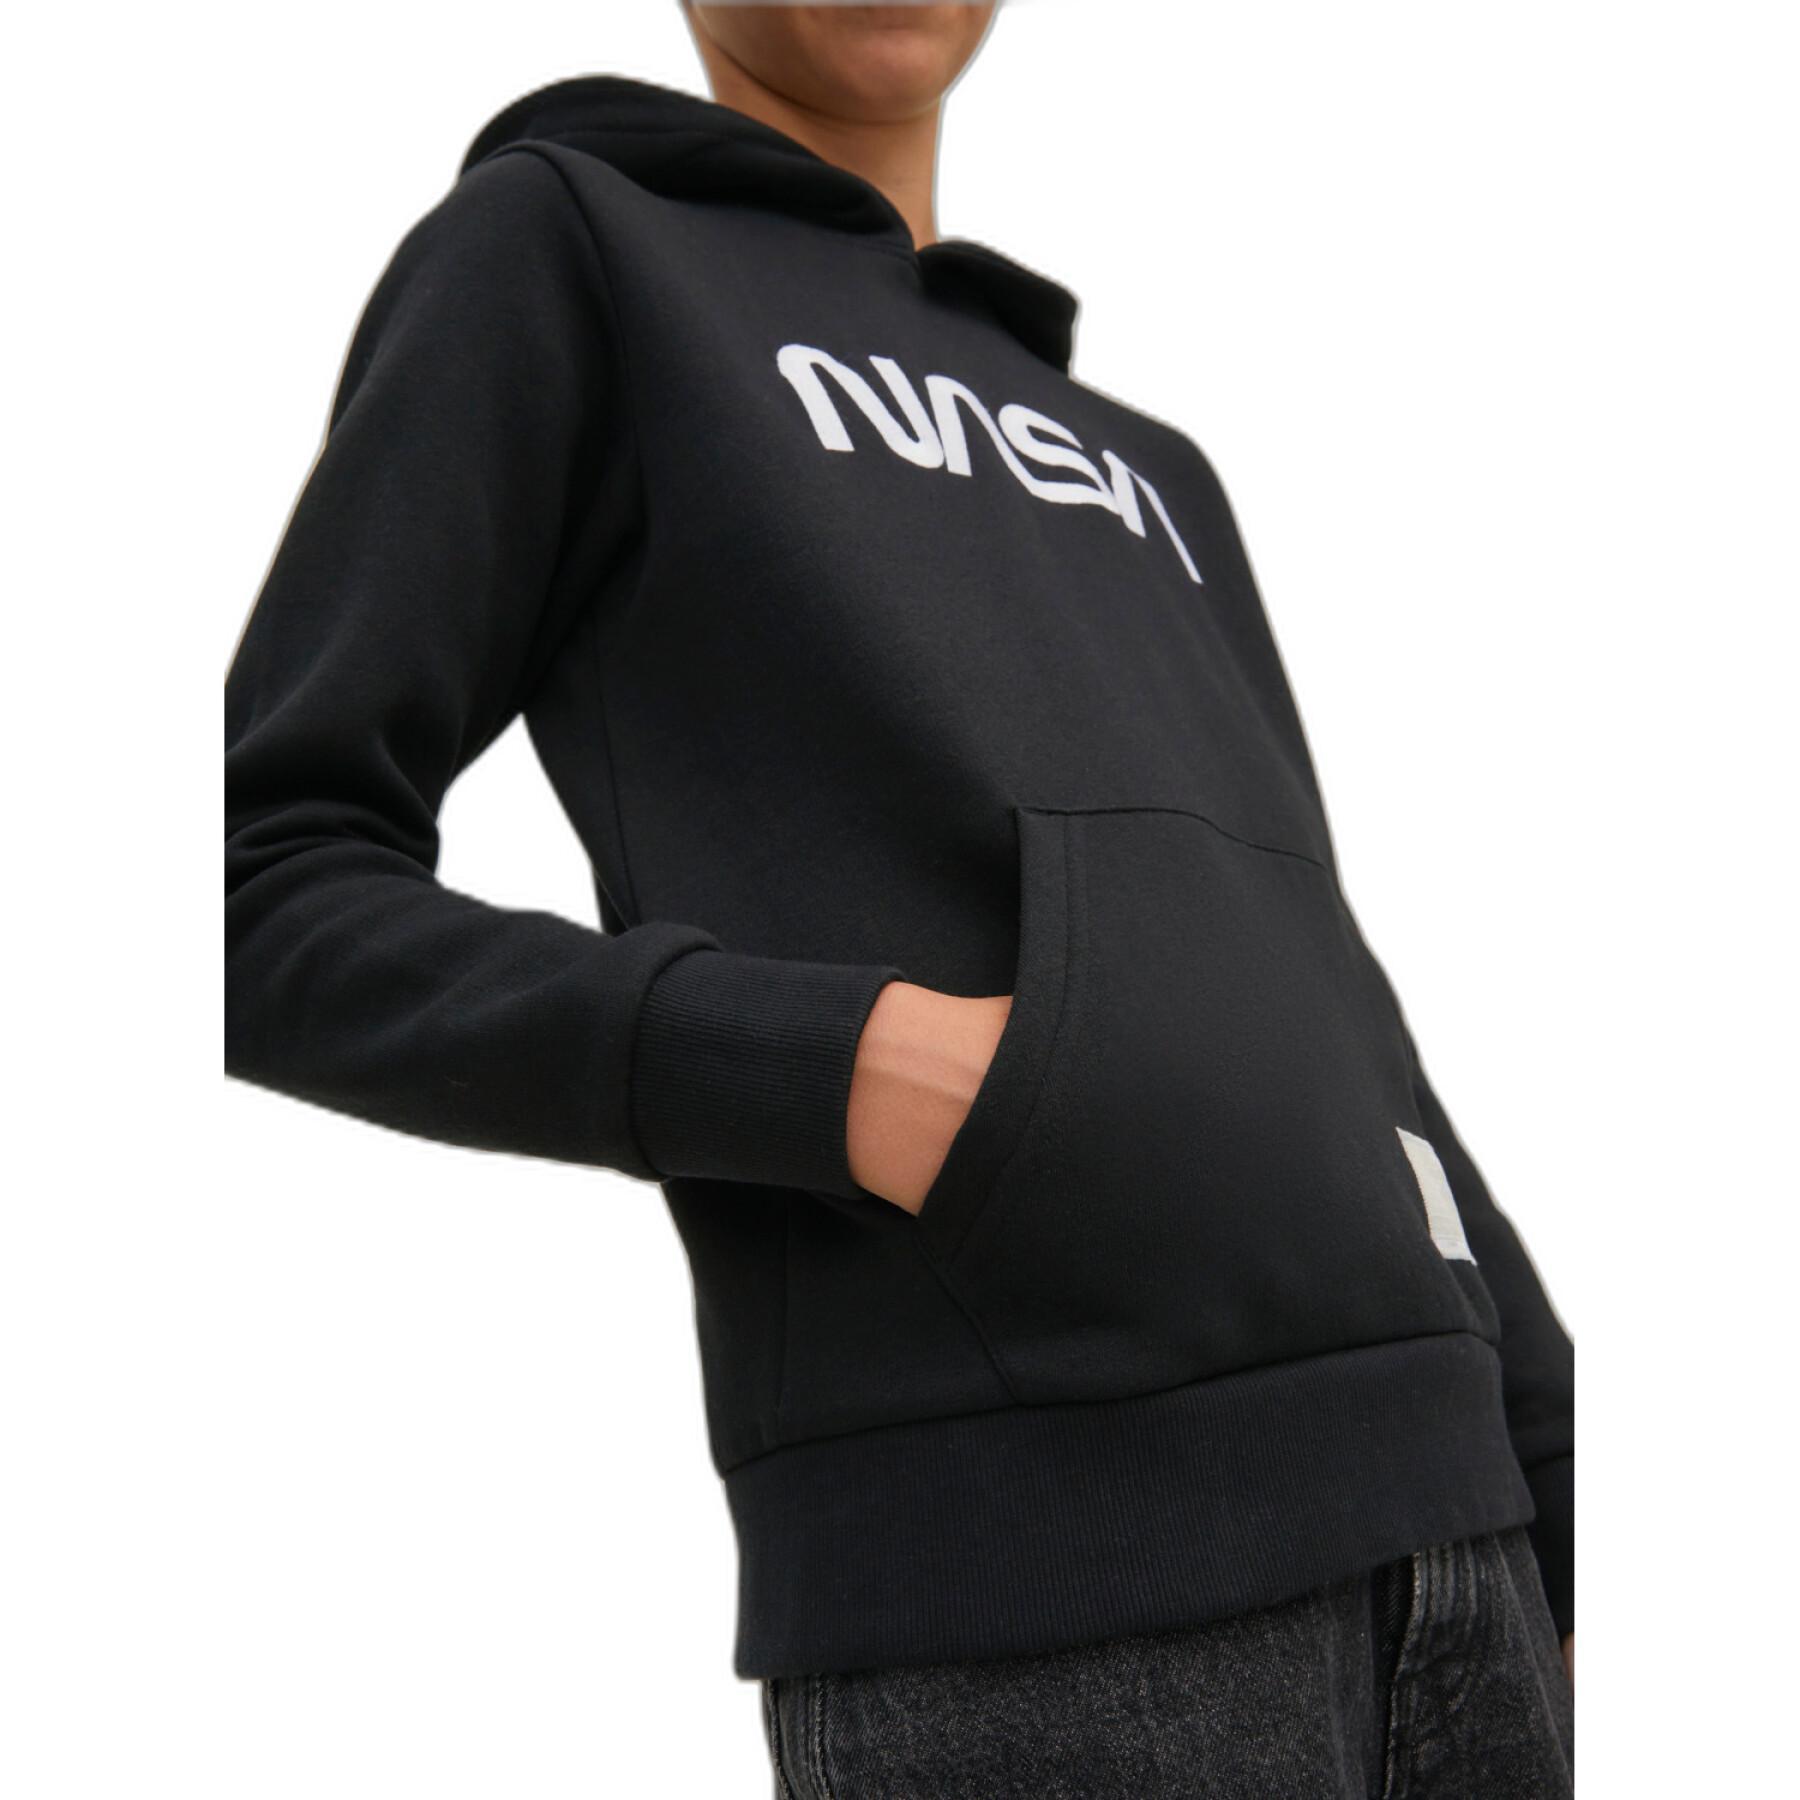 Sweatshirt à capuche enfant Jack & Jones Nasa Logo